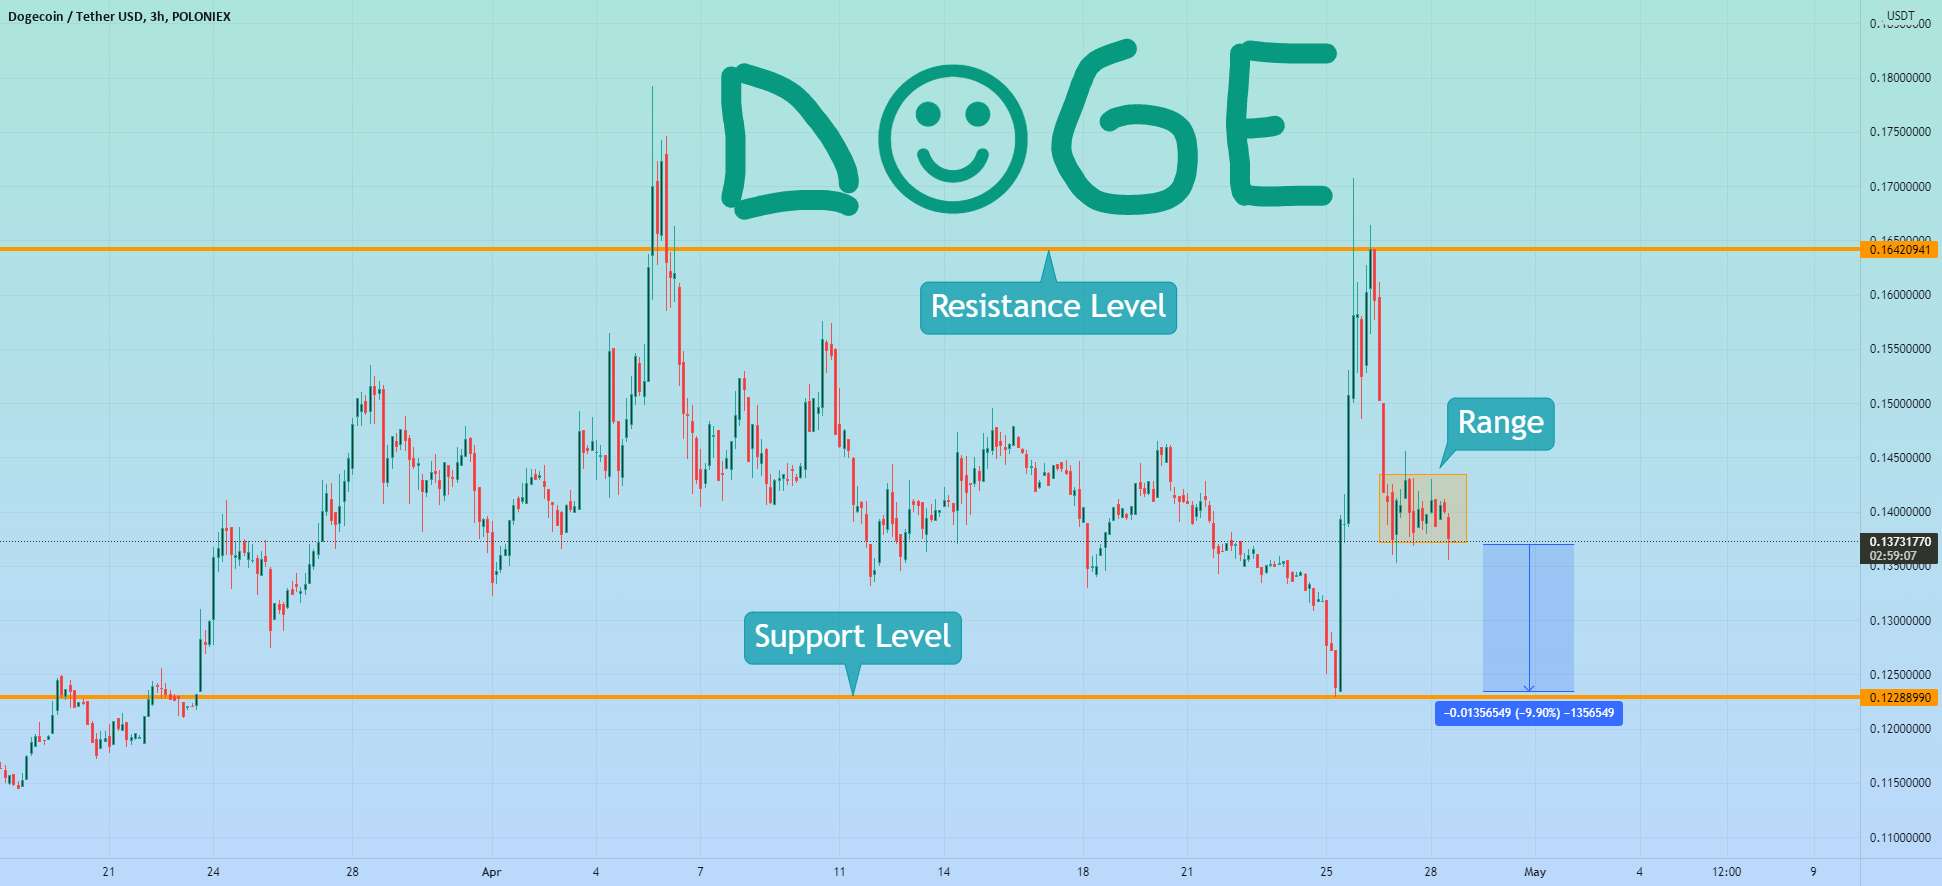 DOGE نتوانست سطح مقاومت را بشکند و روند نزولی جدیدی ایجاد کرد